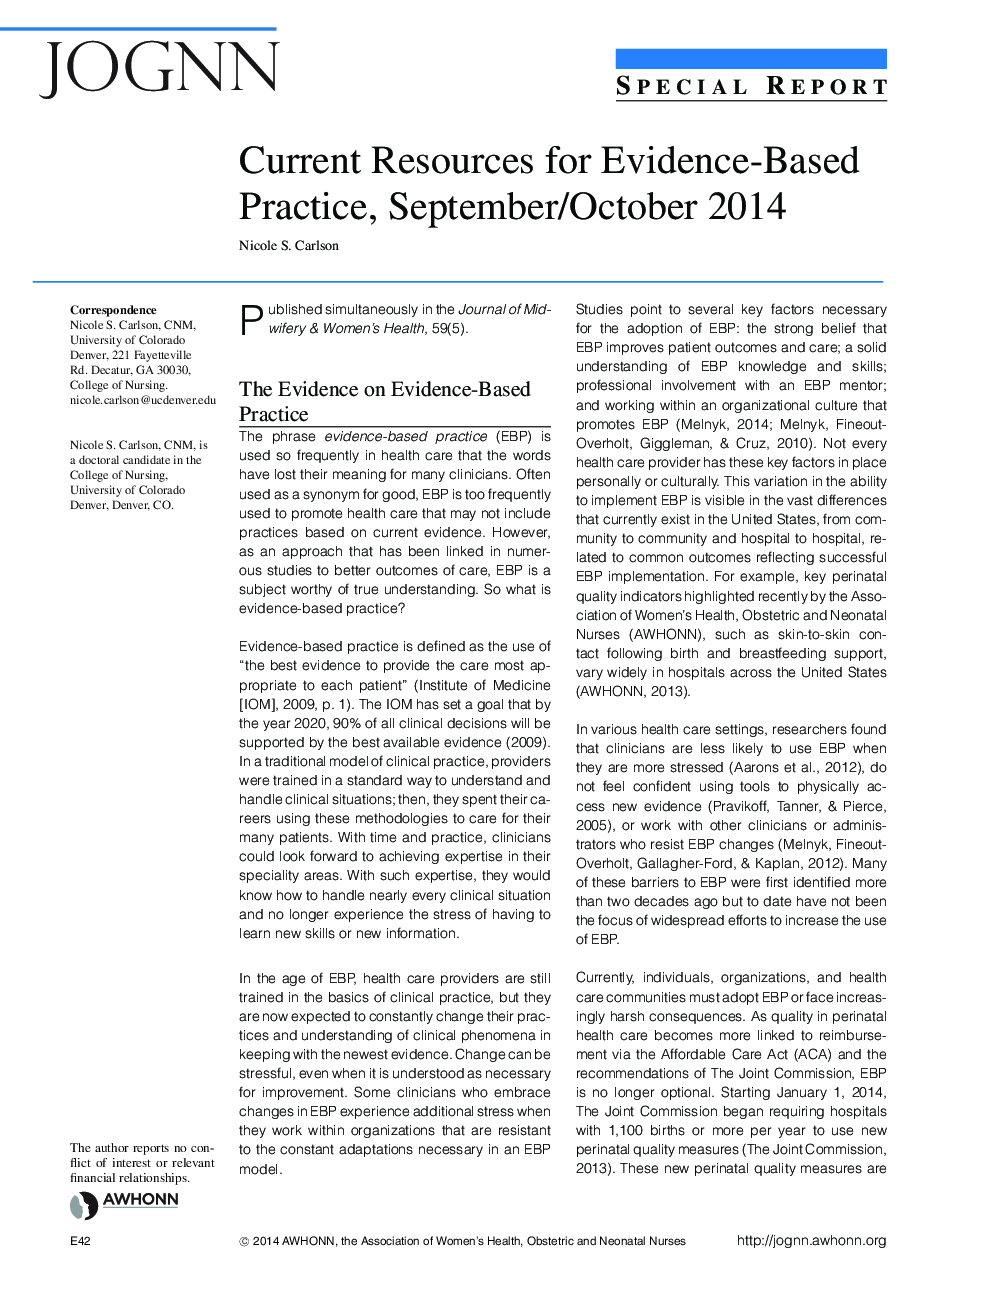 Current Resources for Evidence-Based Practice, September/October 2014